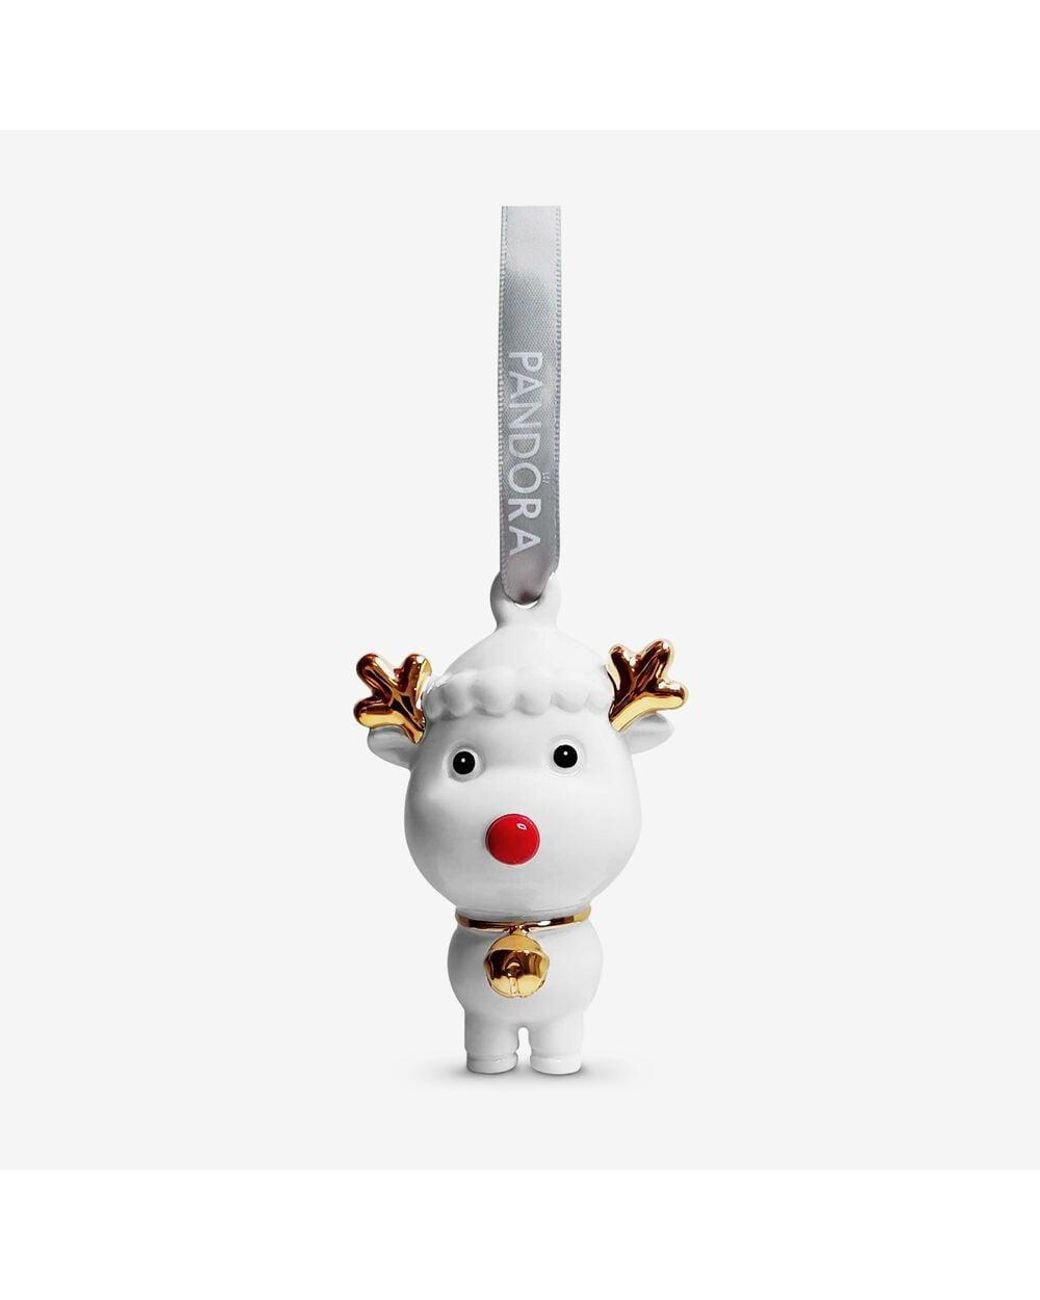 PANDORA Reindeer 2022 Christmas Ornament in White Lyst UK